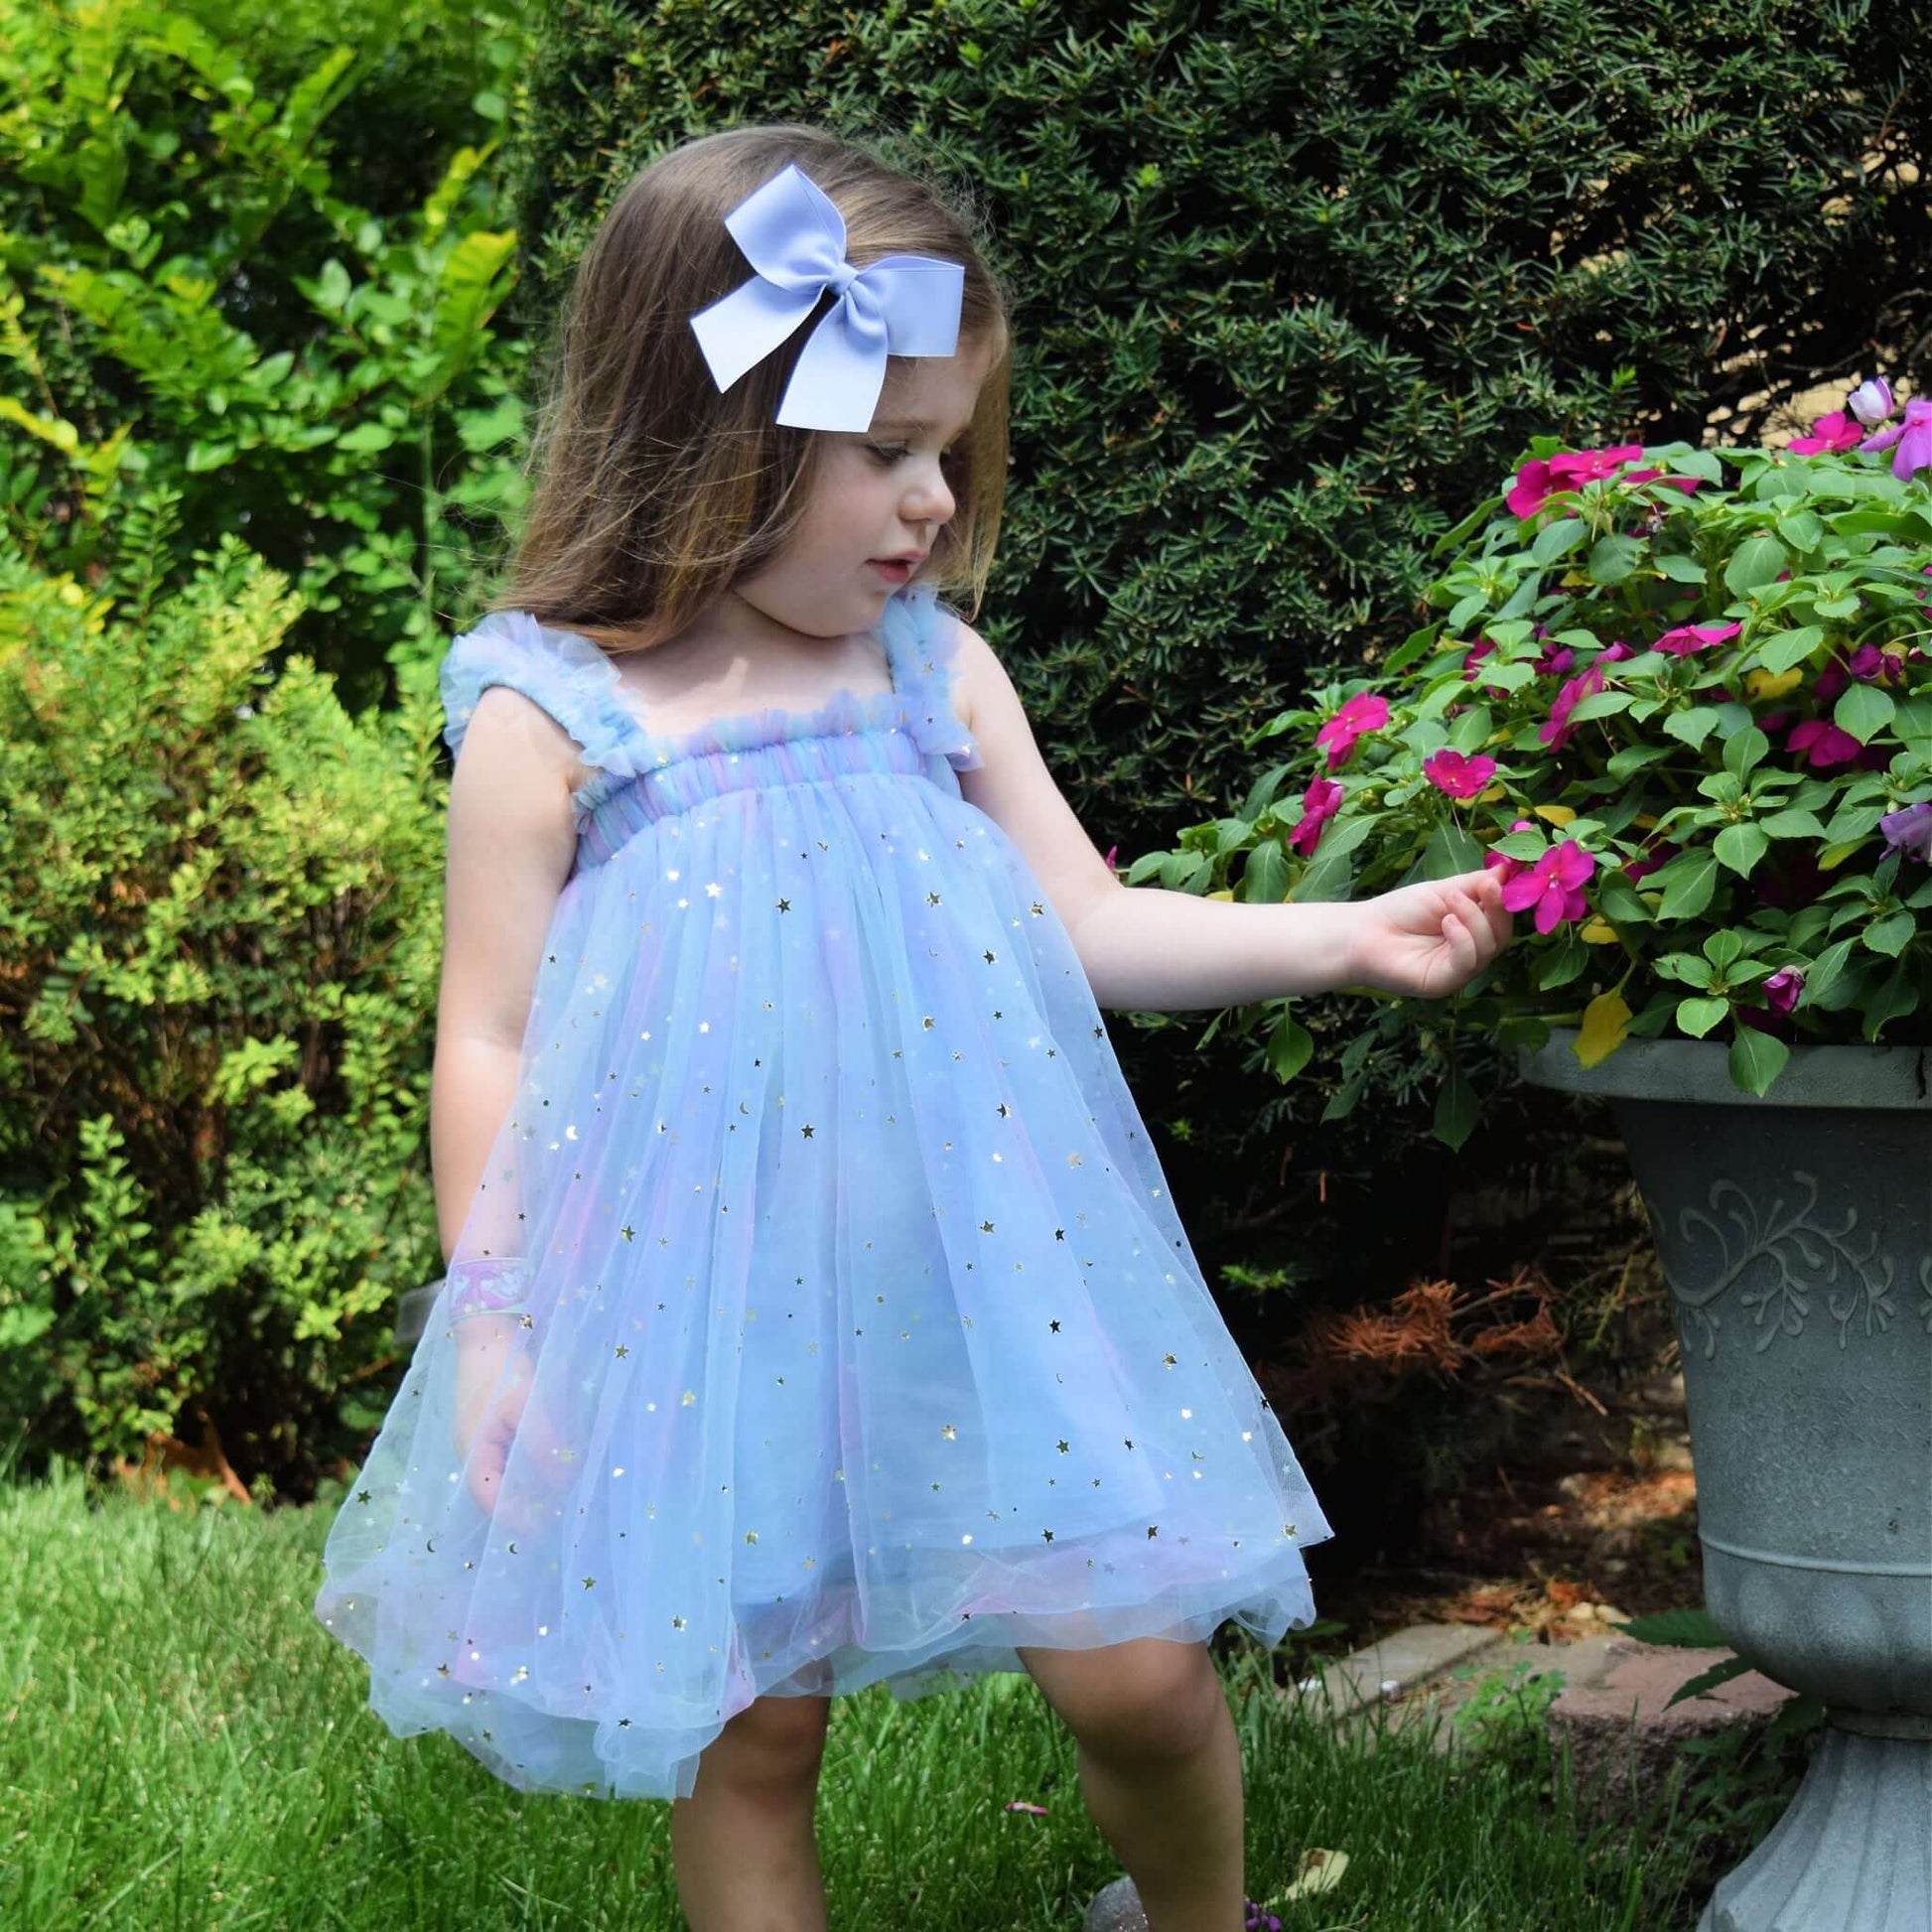 Little girl in pastel dress wearing 4 inch grosgrain Sailor hair bow, standing near flowers in a garden.